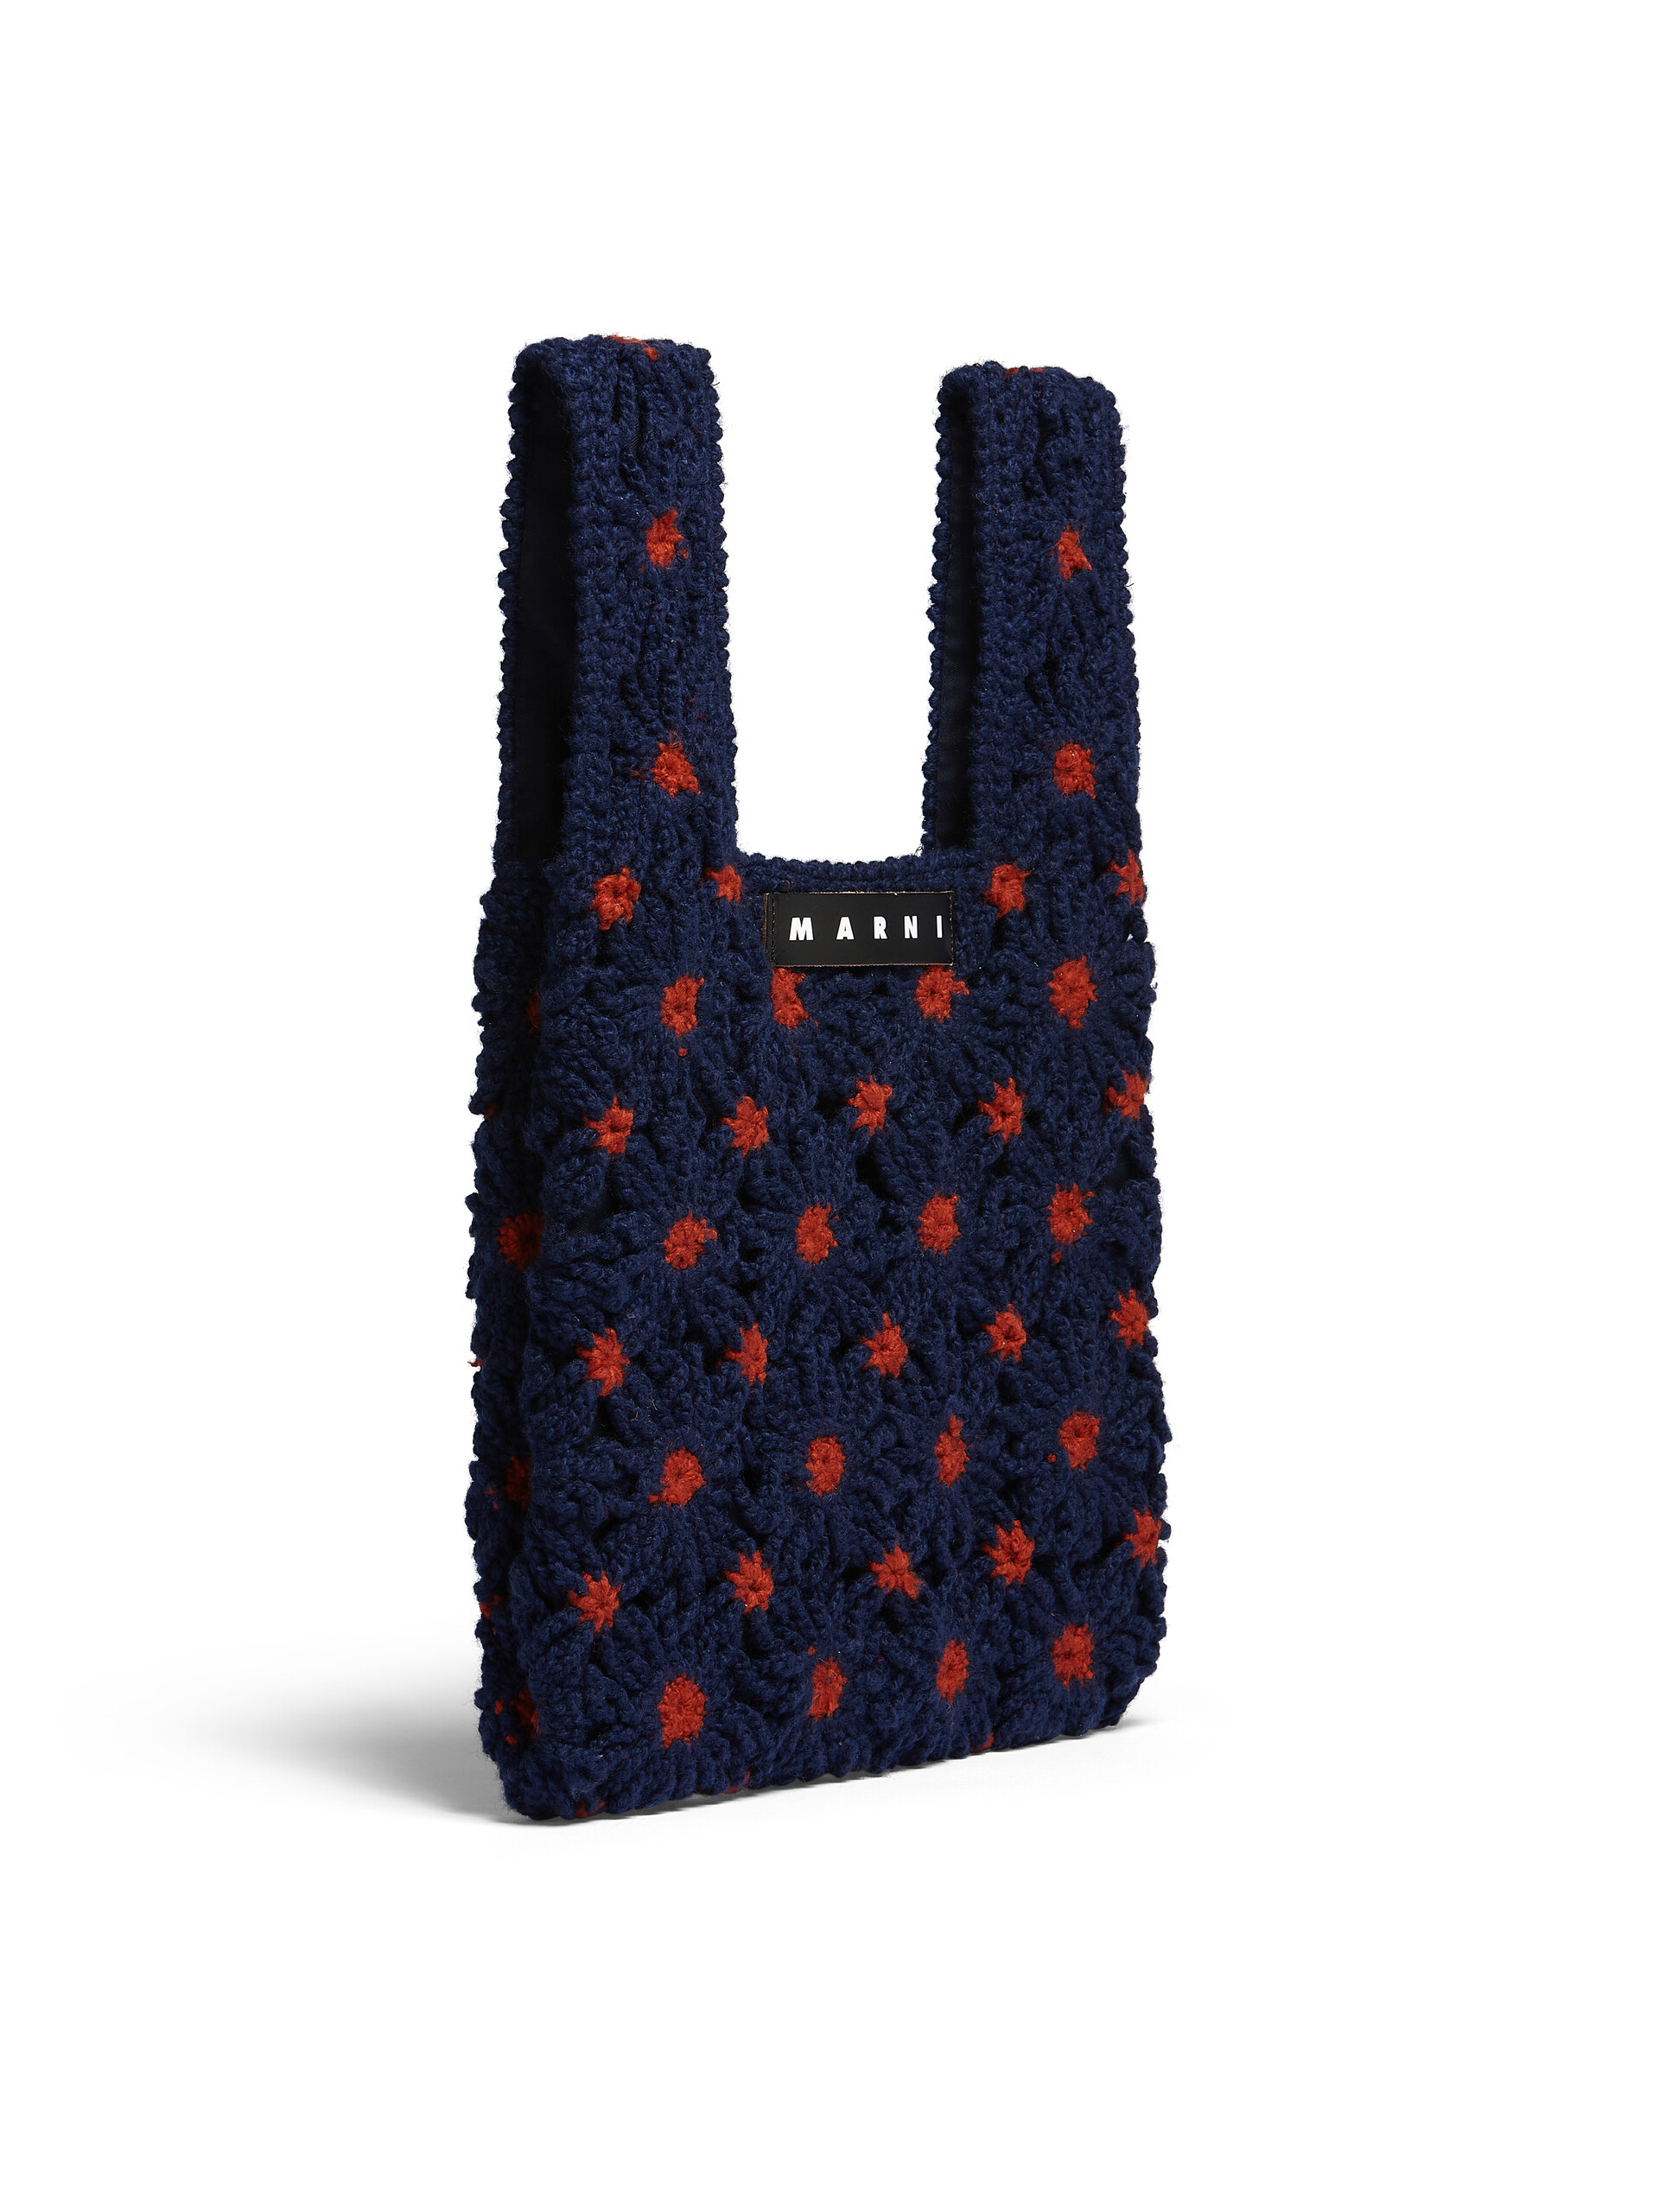 MARNI MARKET FISH bag in blue and red crochet | Marni